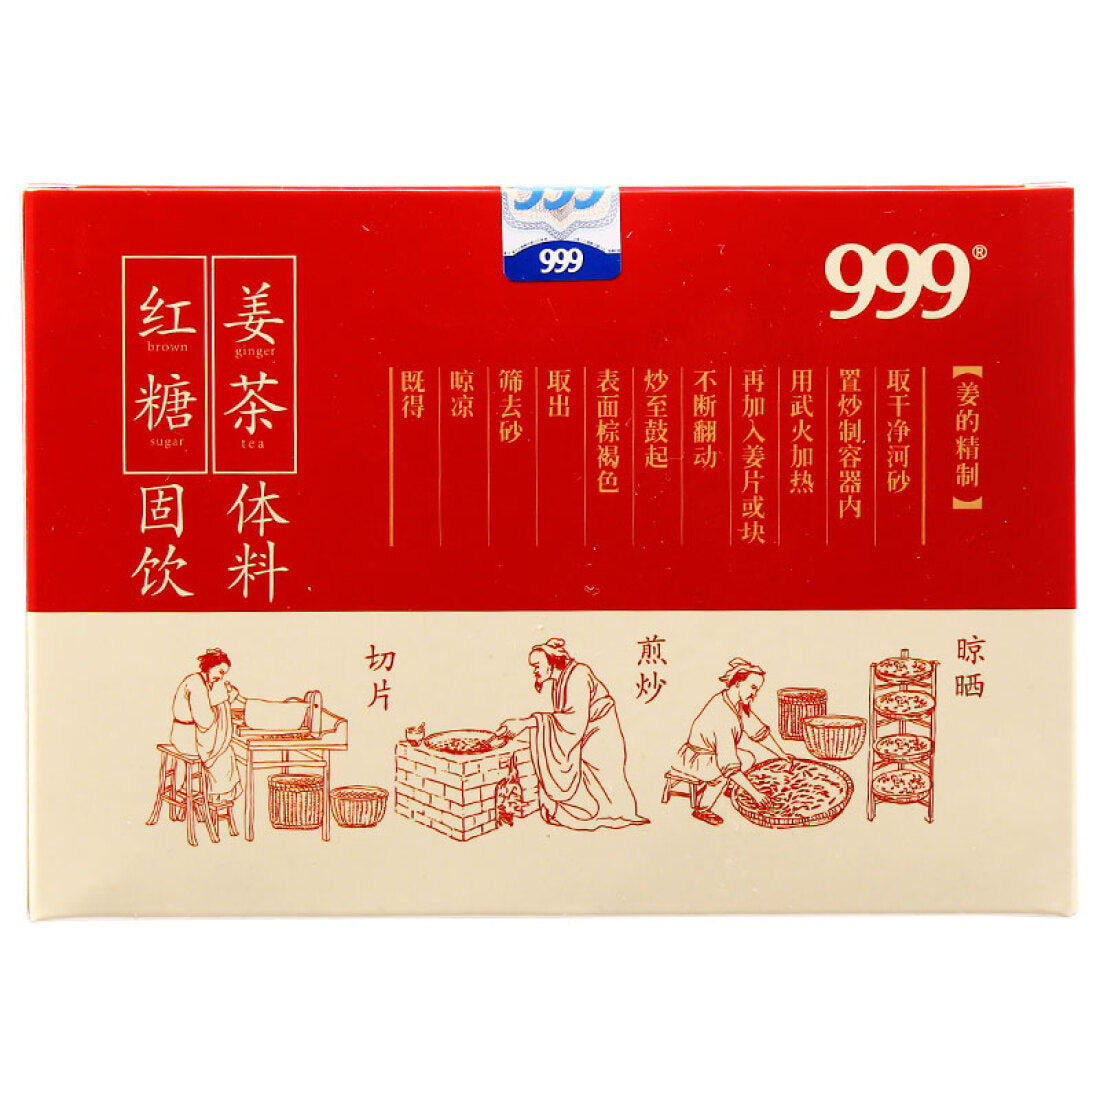 999 Brown Sugar Ginger Tea 999 三九红糖姜养生茶 14Bags